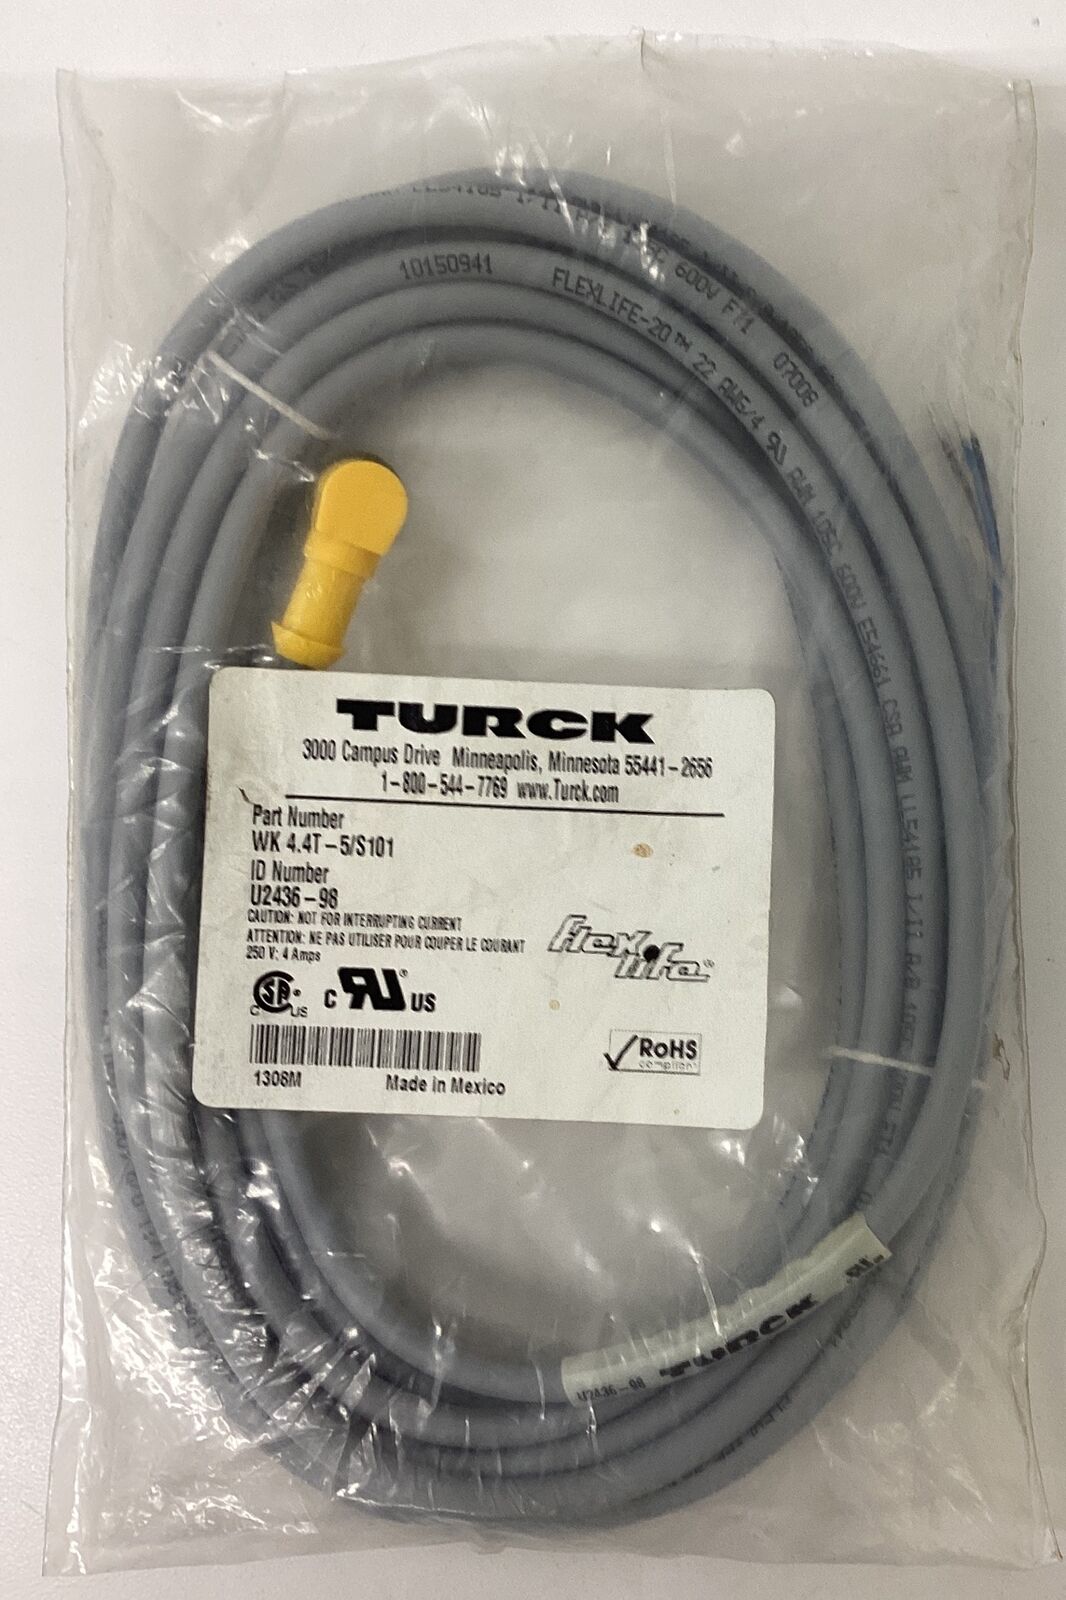 Turck wk-4.4T-5/s101  u2436-98 90 Degree 4 Pole Female Cable (GR210) - 0